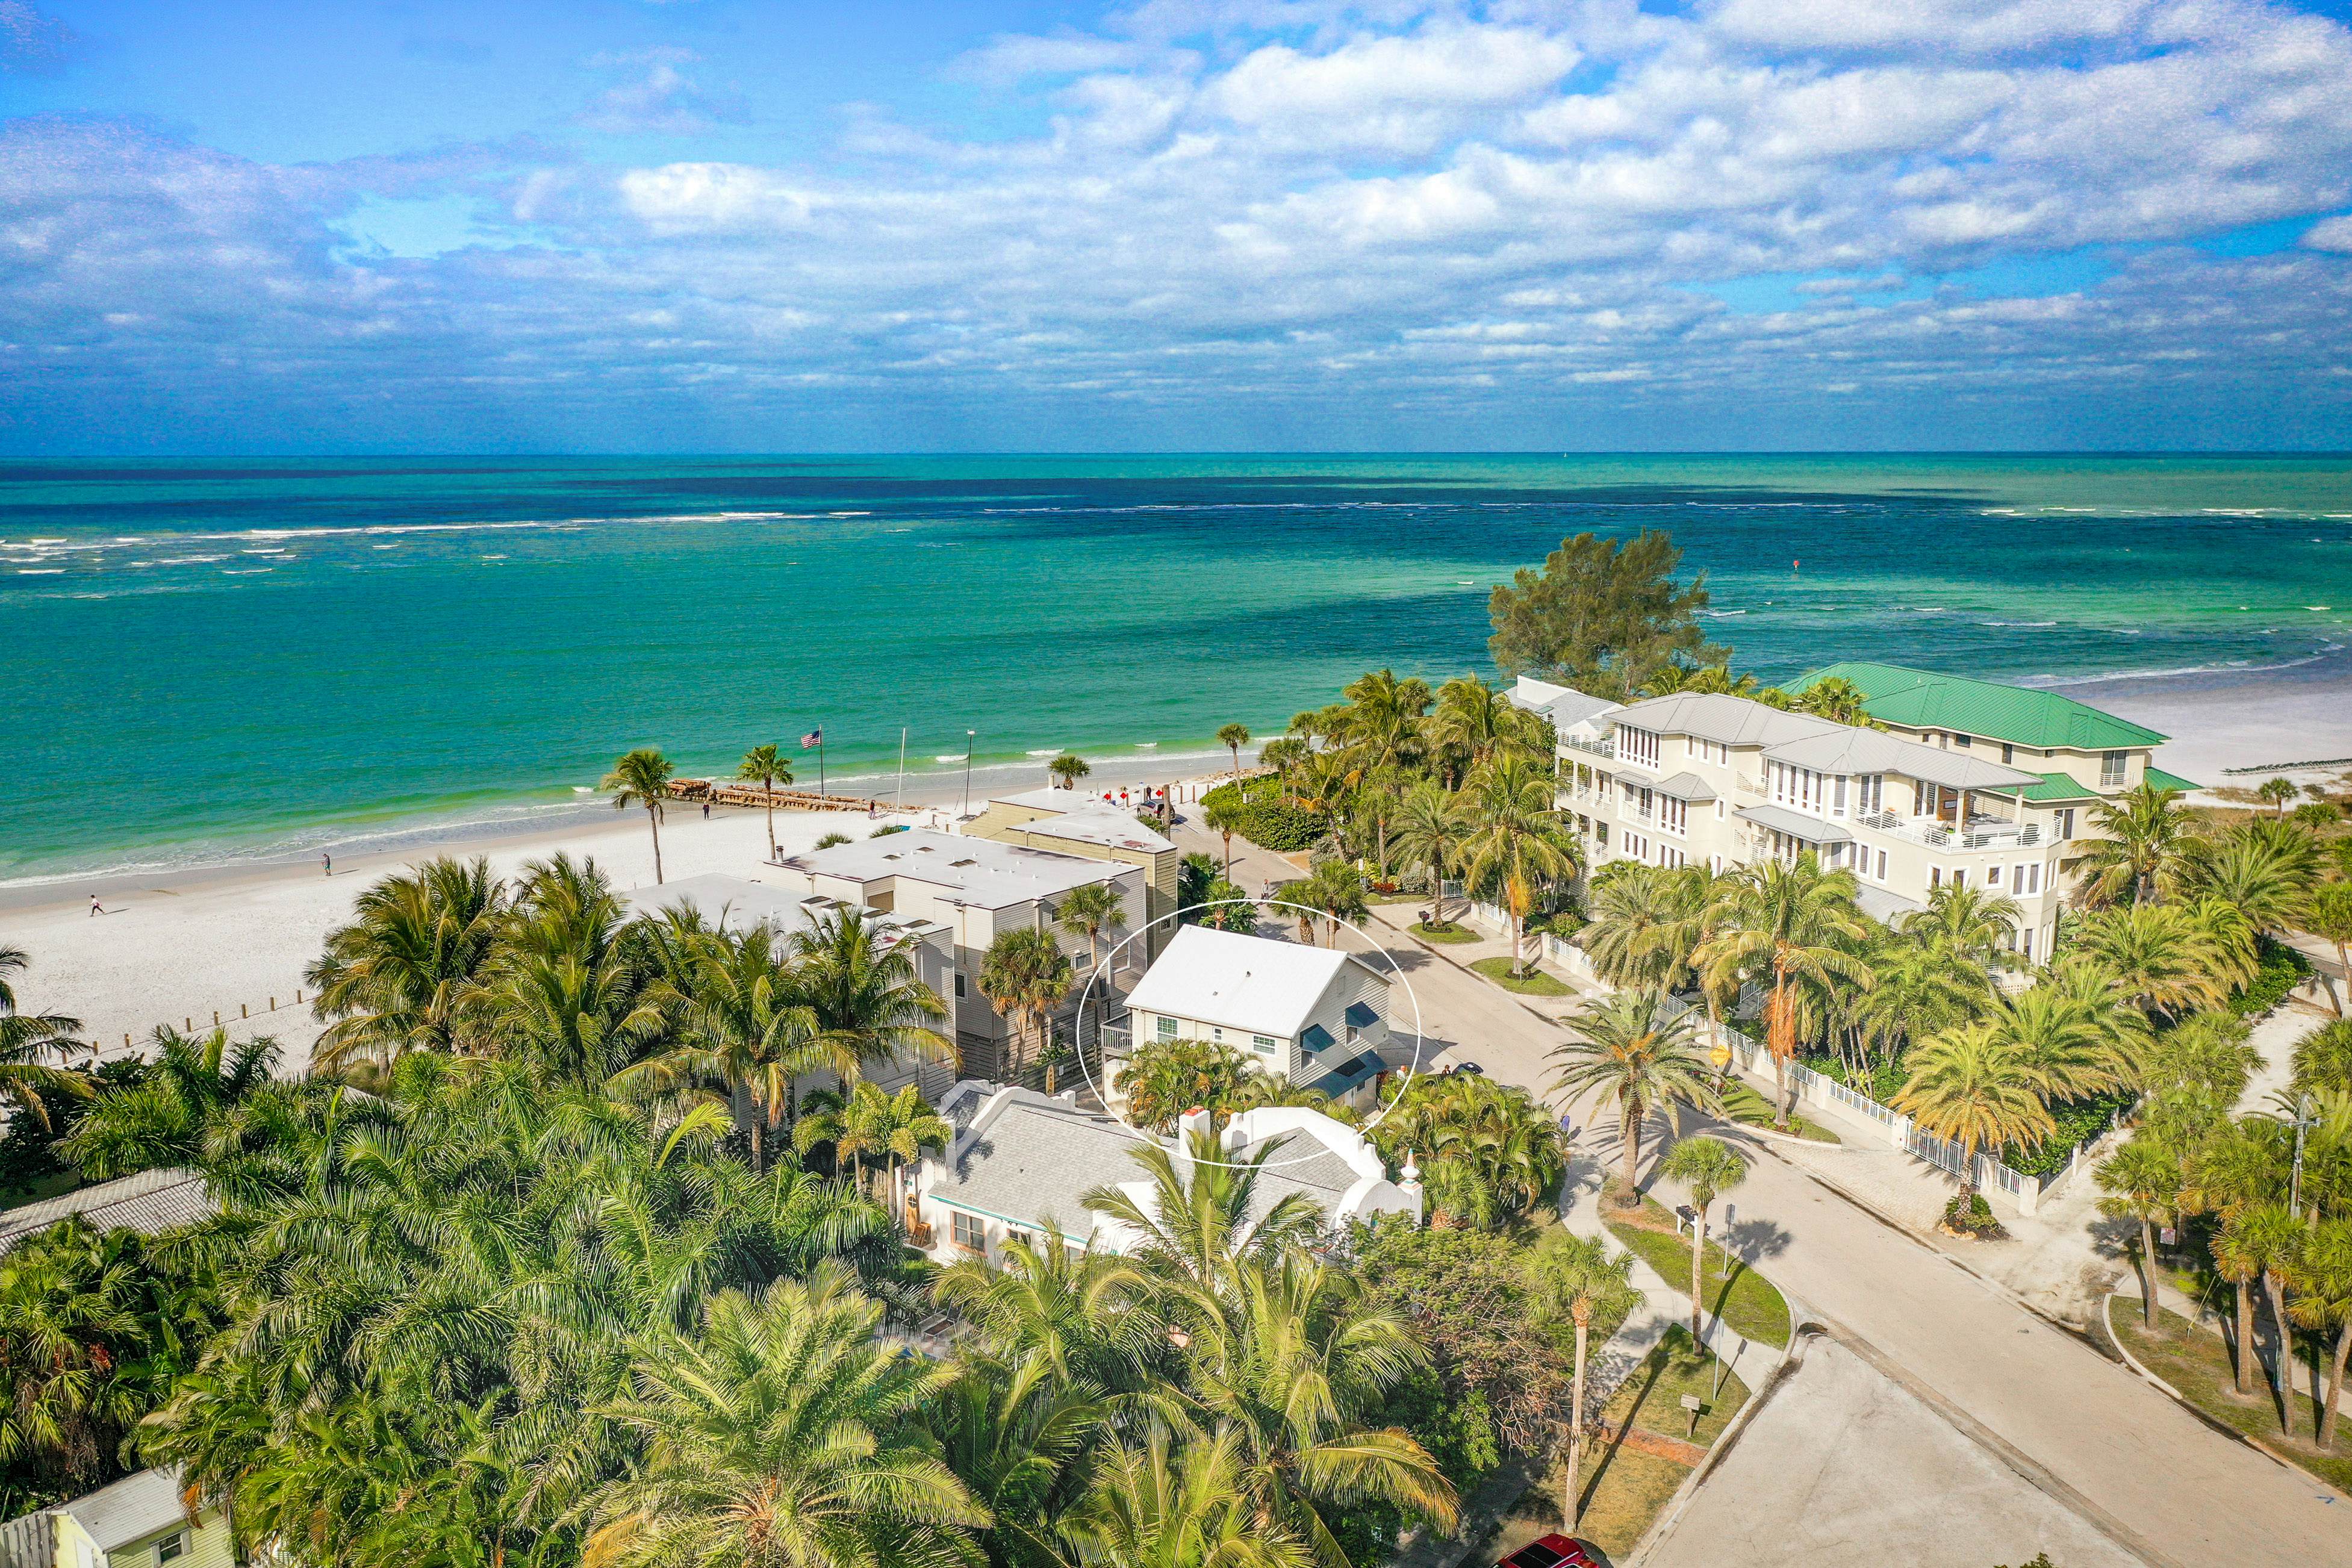 Parrot Beach Cottages Suite 3 1 Bd Siesta Key Fl Vacation Rental